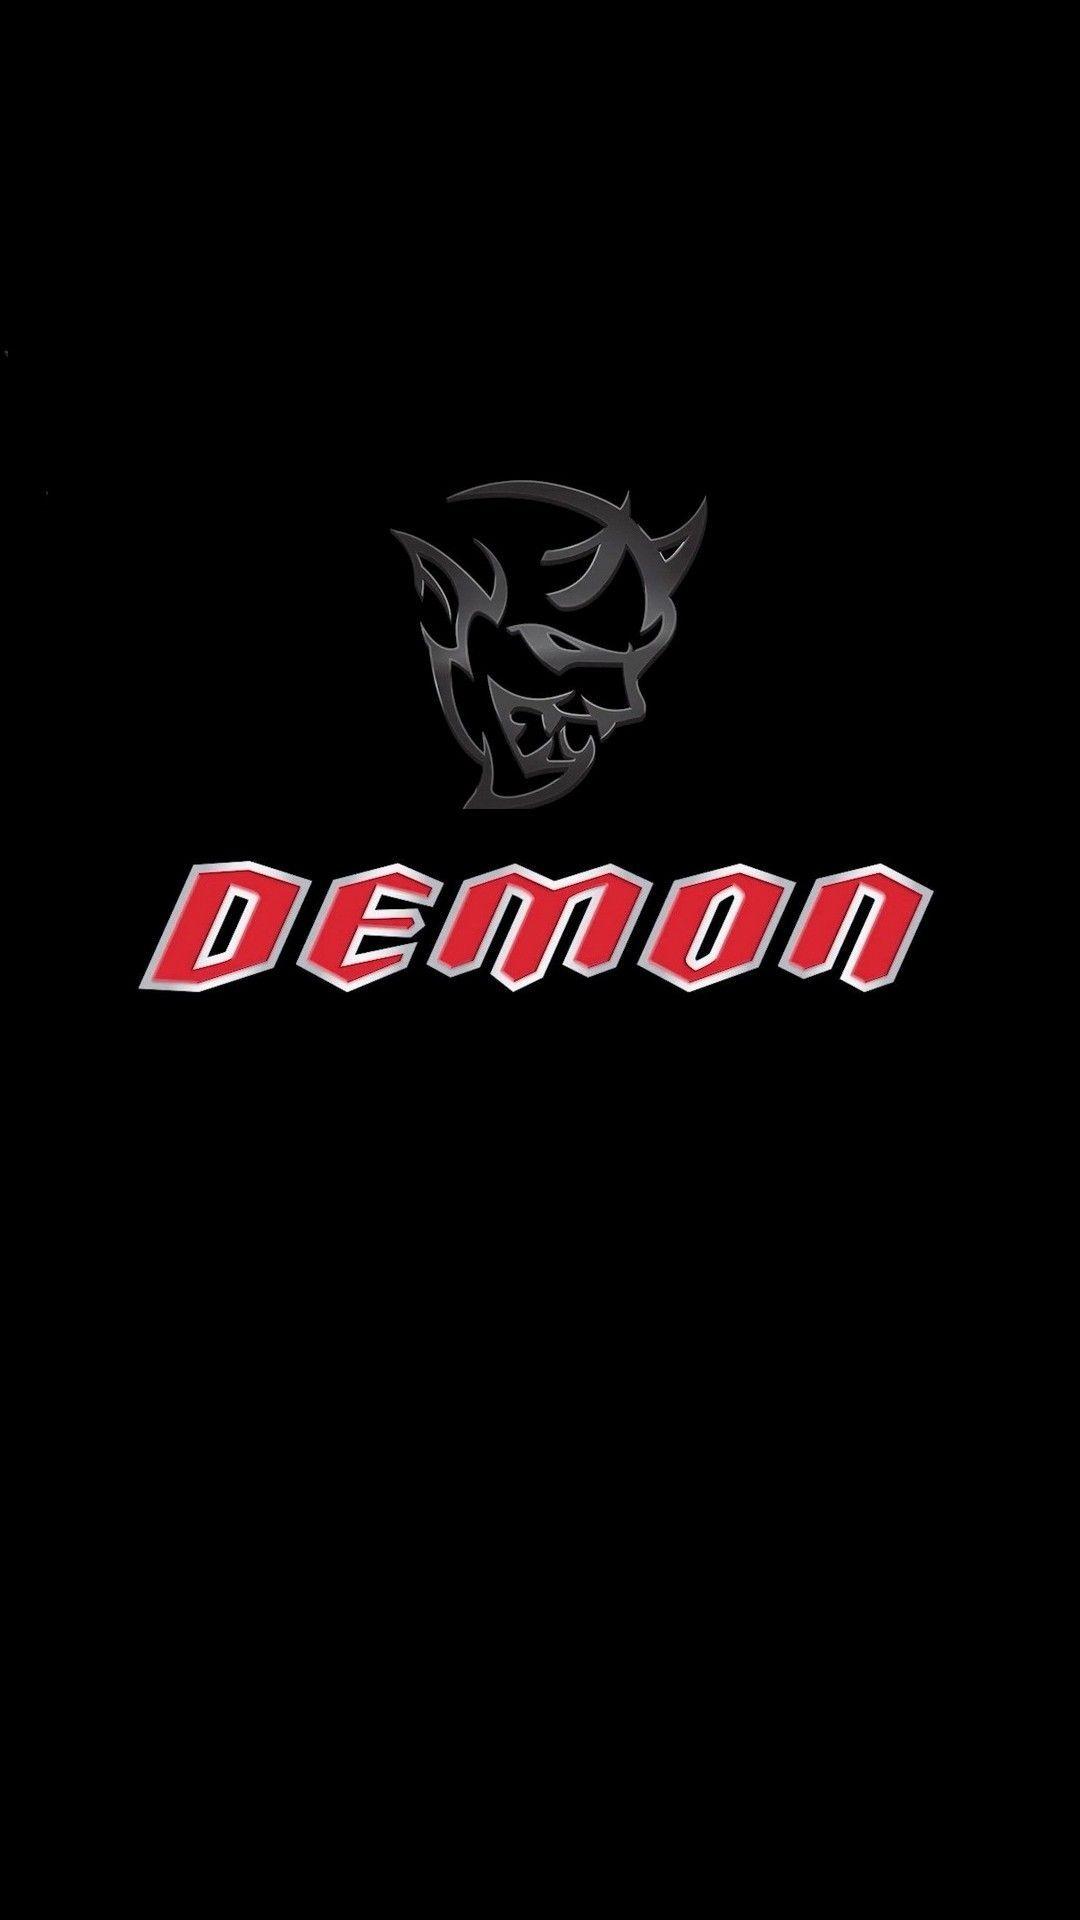 Dodge Demon Logo - Dodge Demon Logo iPhone Wallpaper | iPhoneWallpapers | Dodge, Cars ...